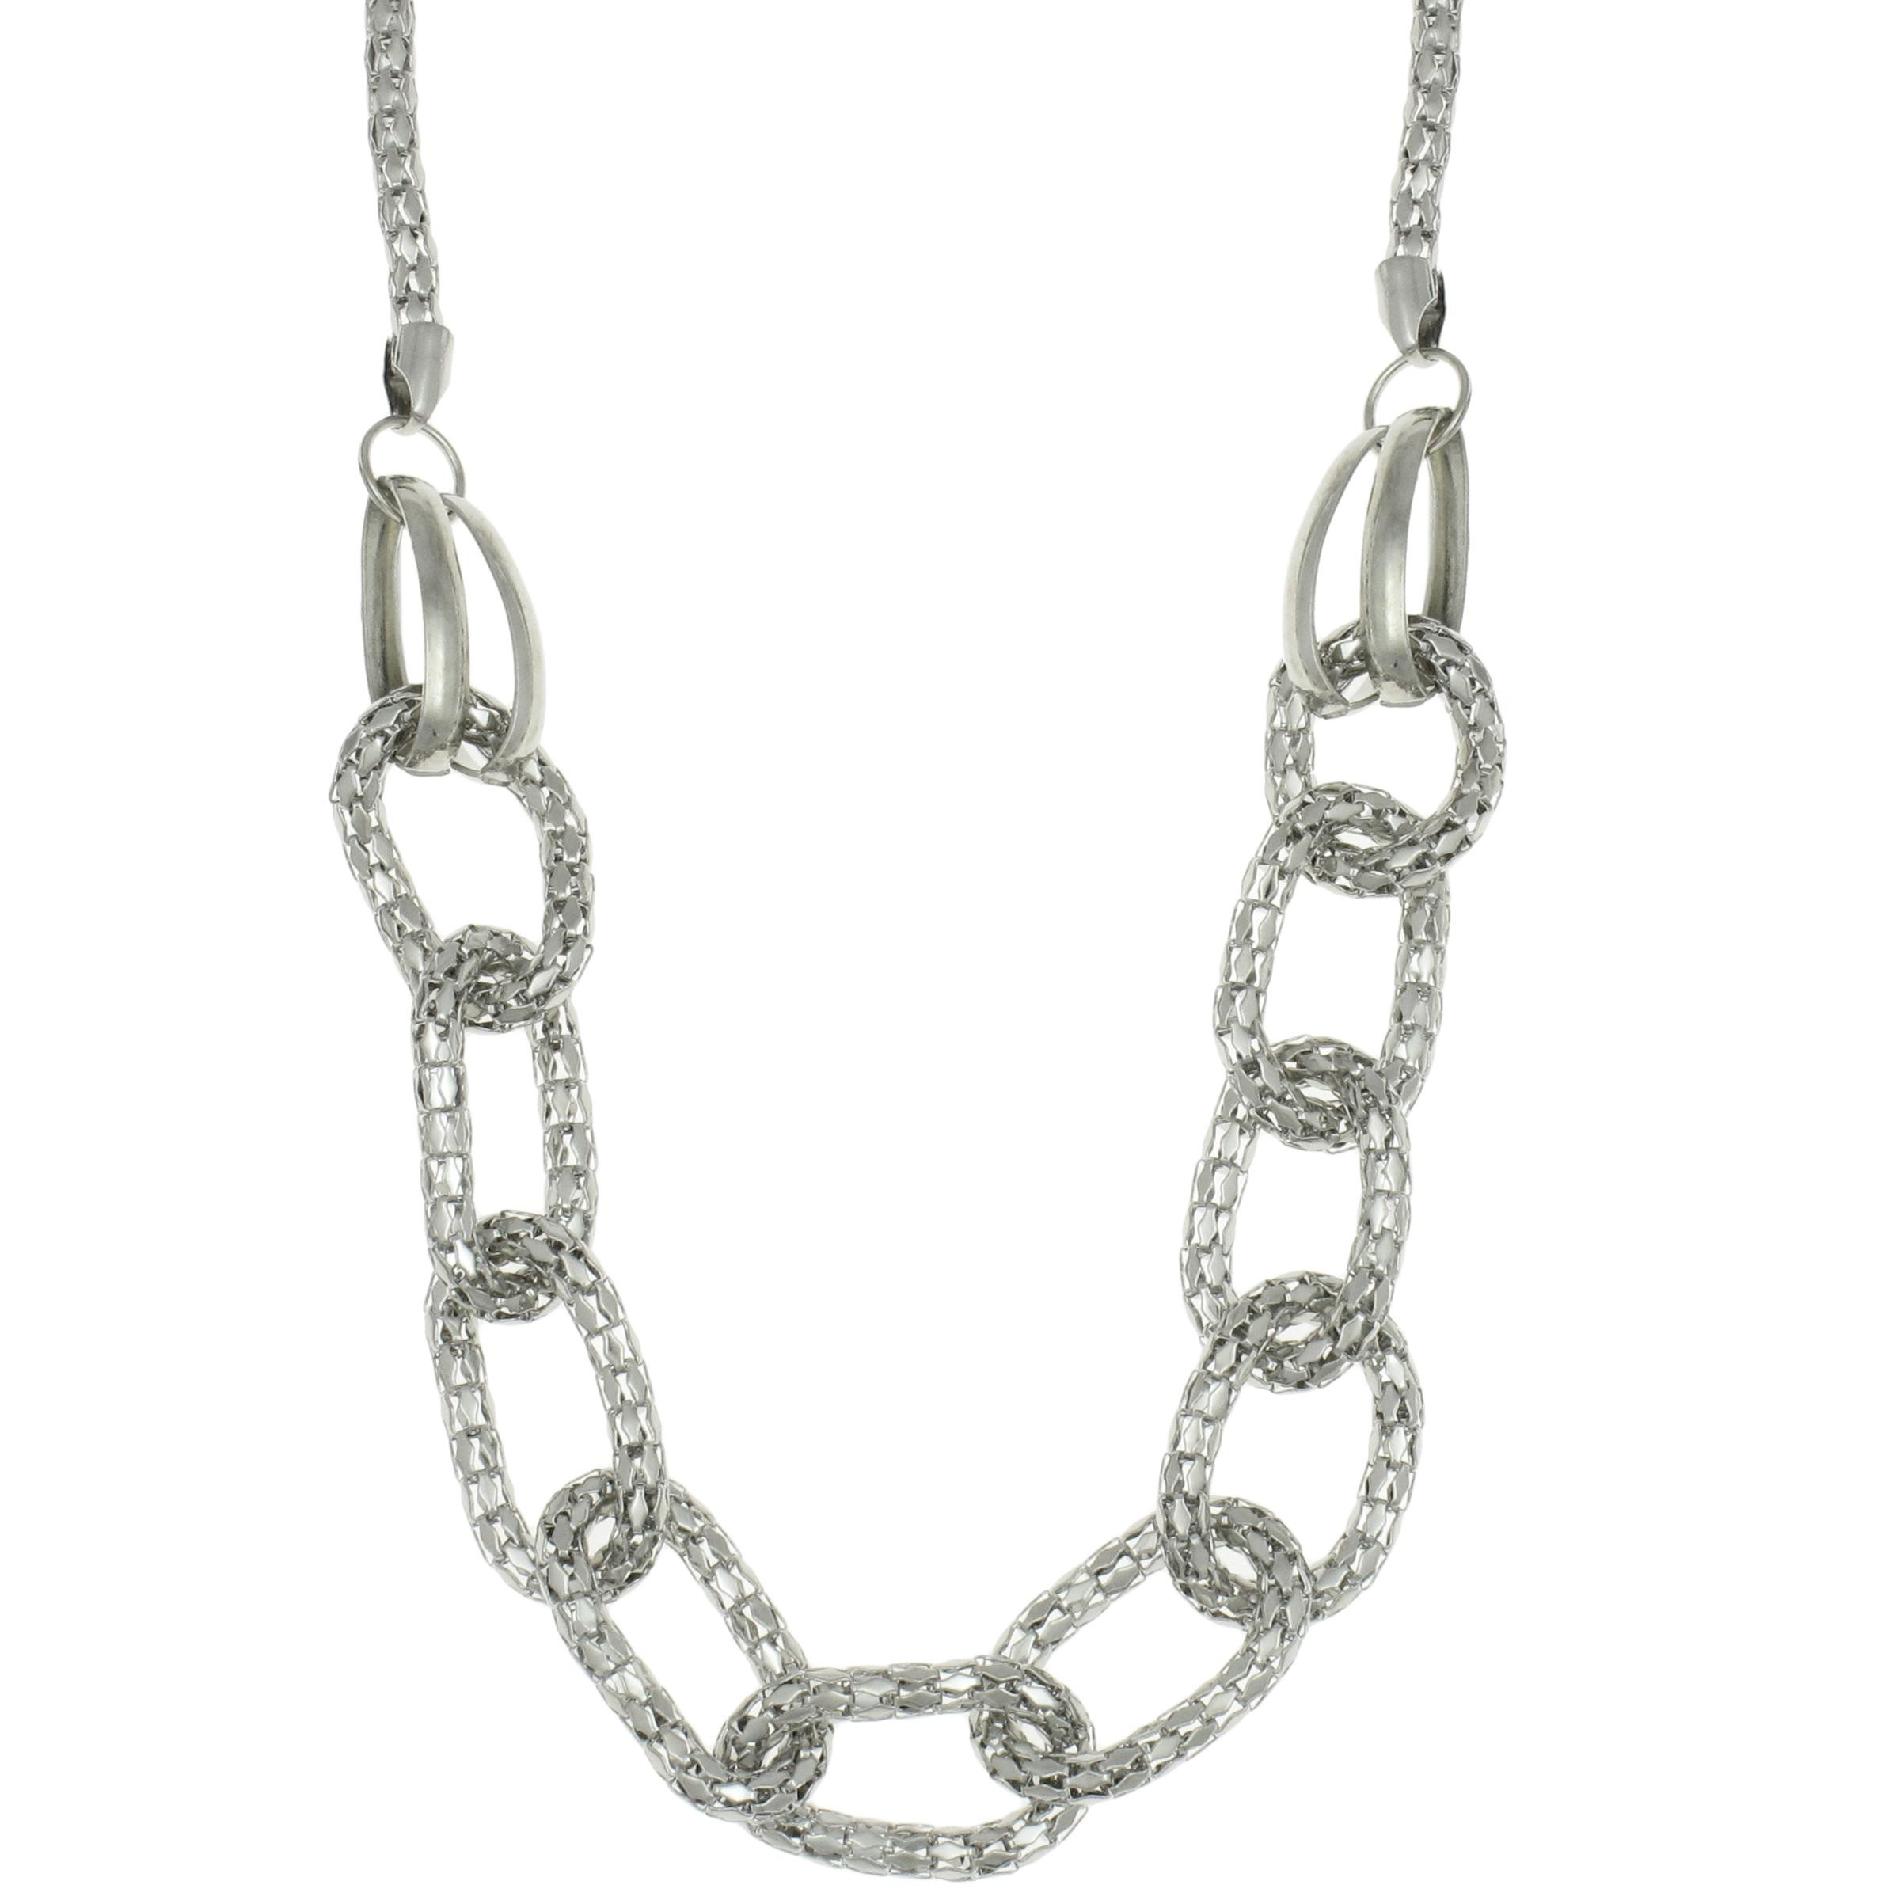 Junior's Linked Chain Necklace - Hematite Tone